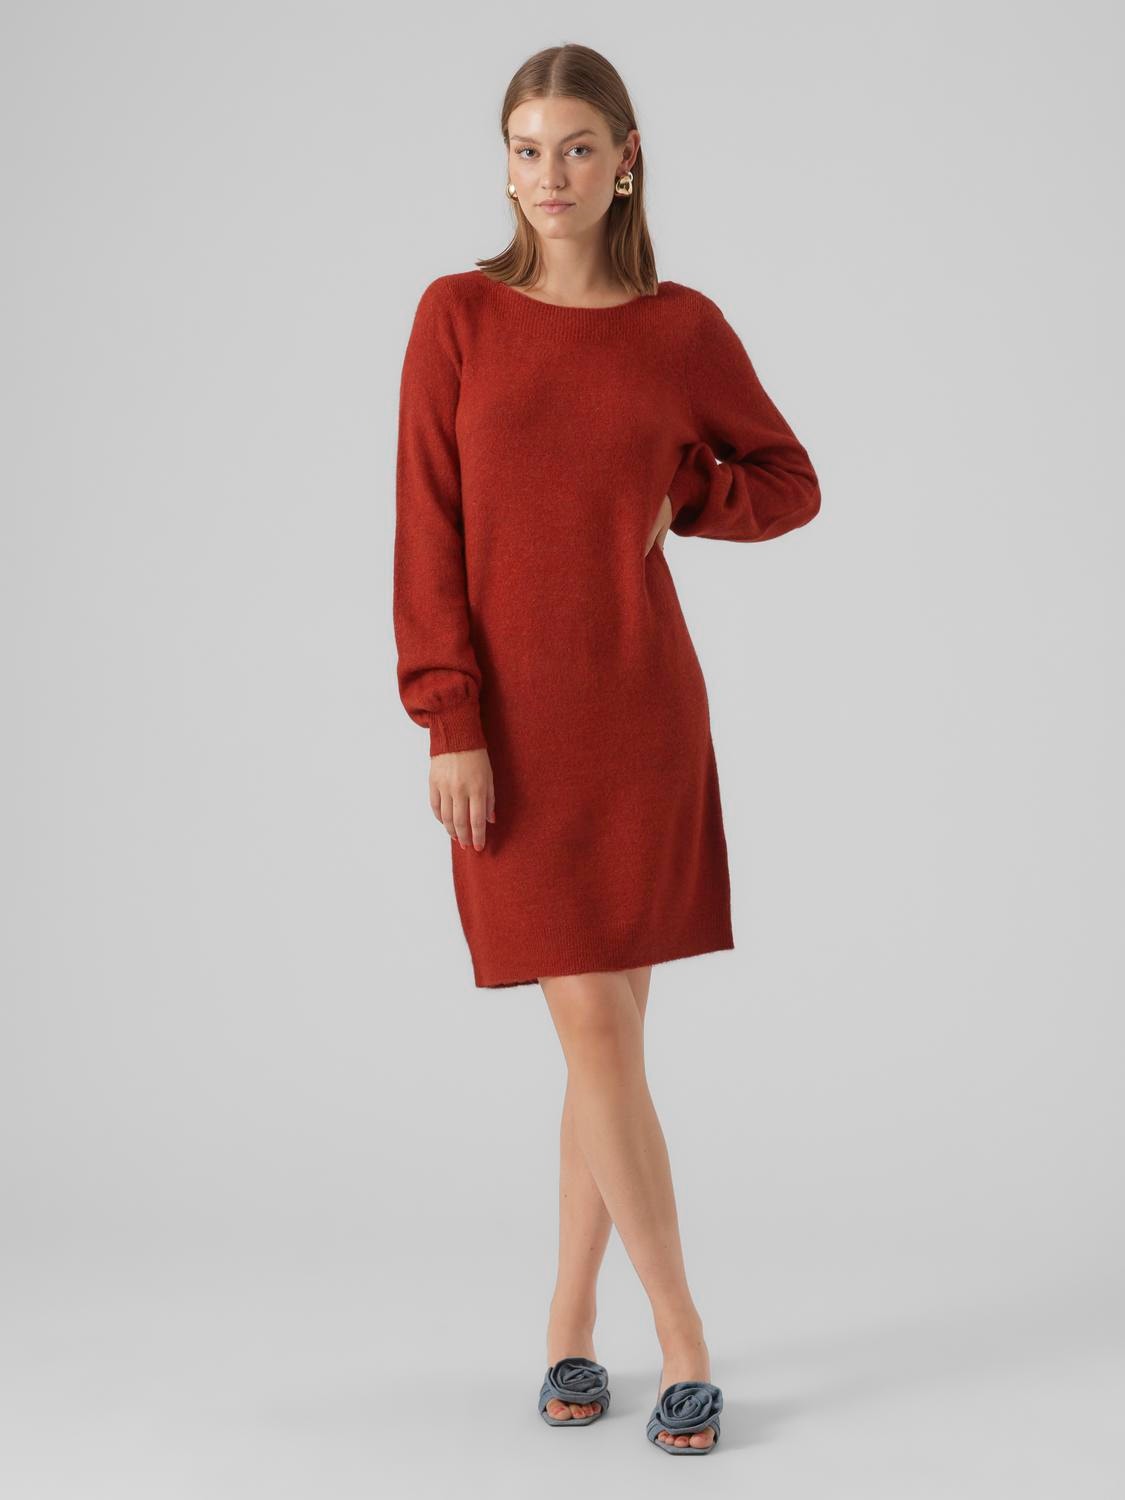 Vero Moda VMLEFILE Short dress -Red Ochre - 10296805